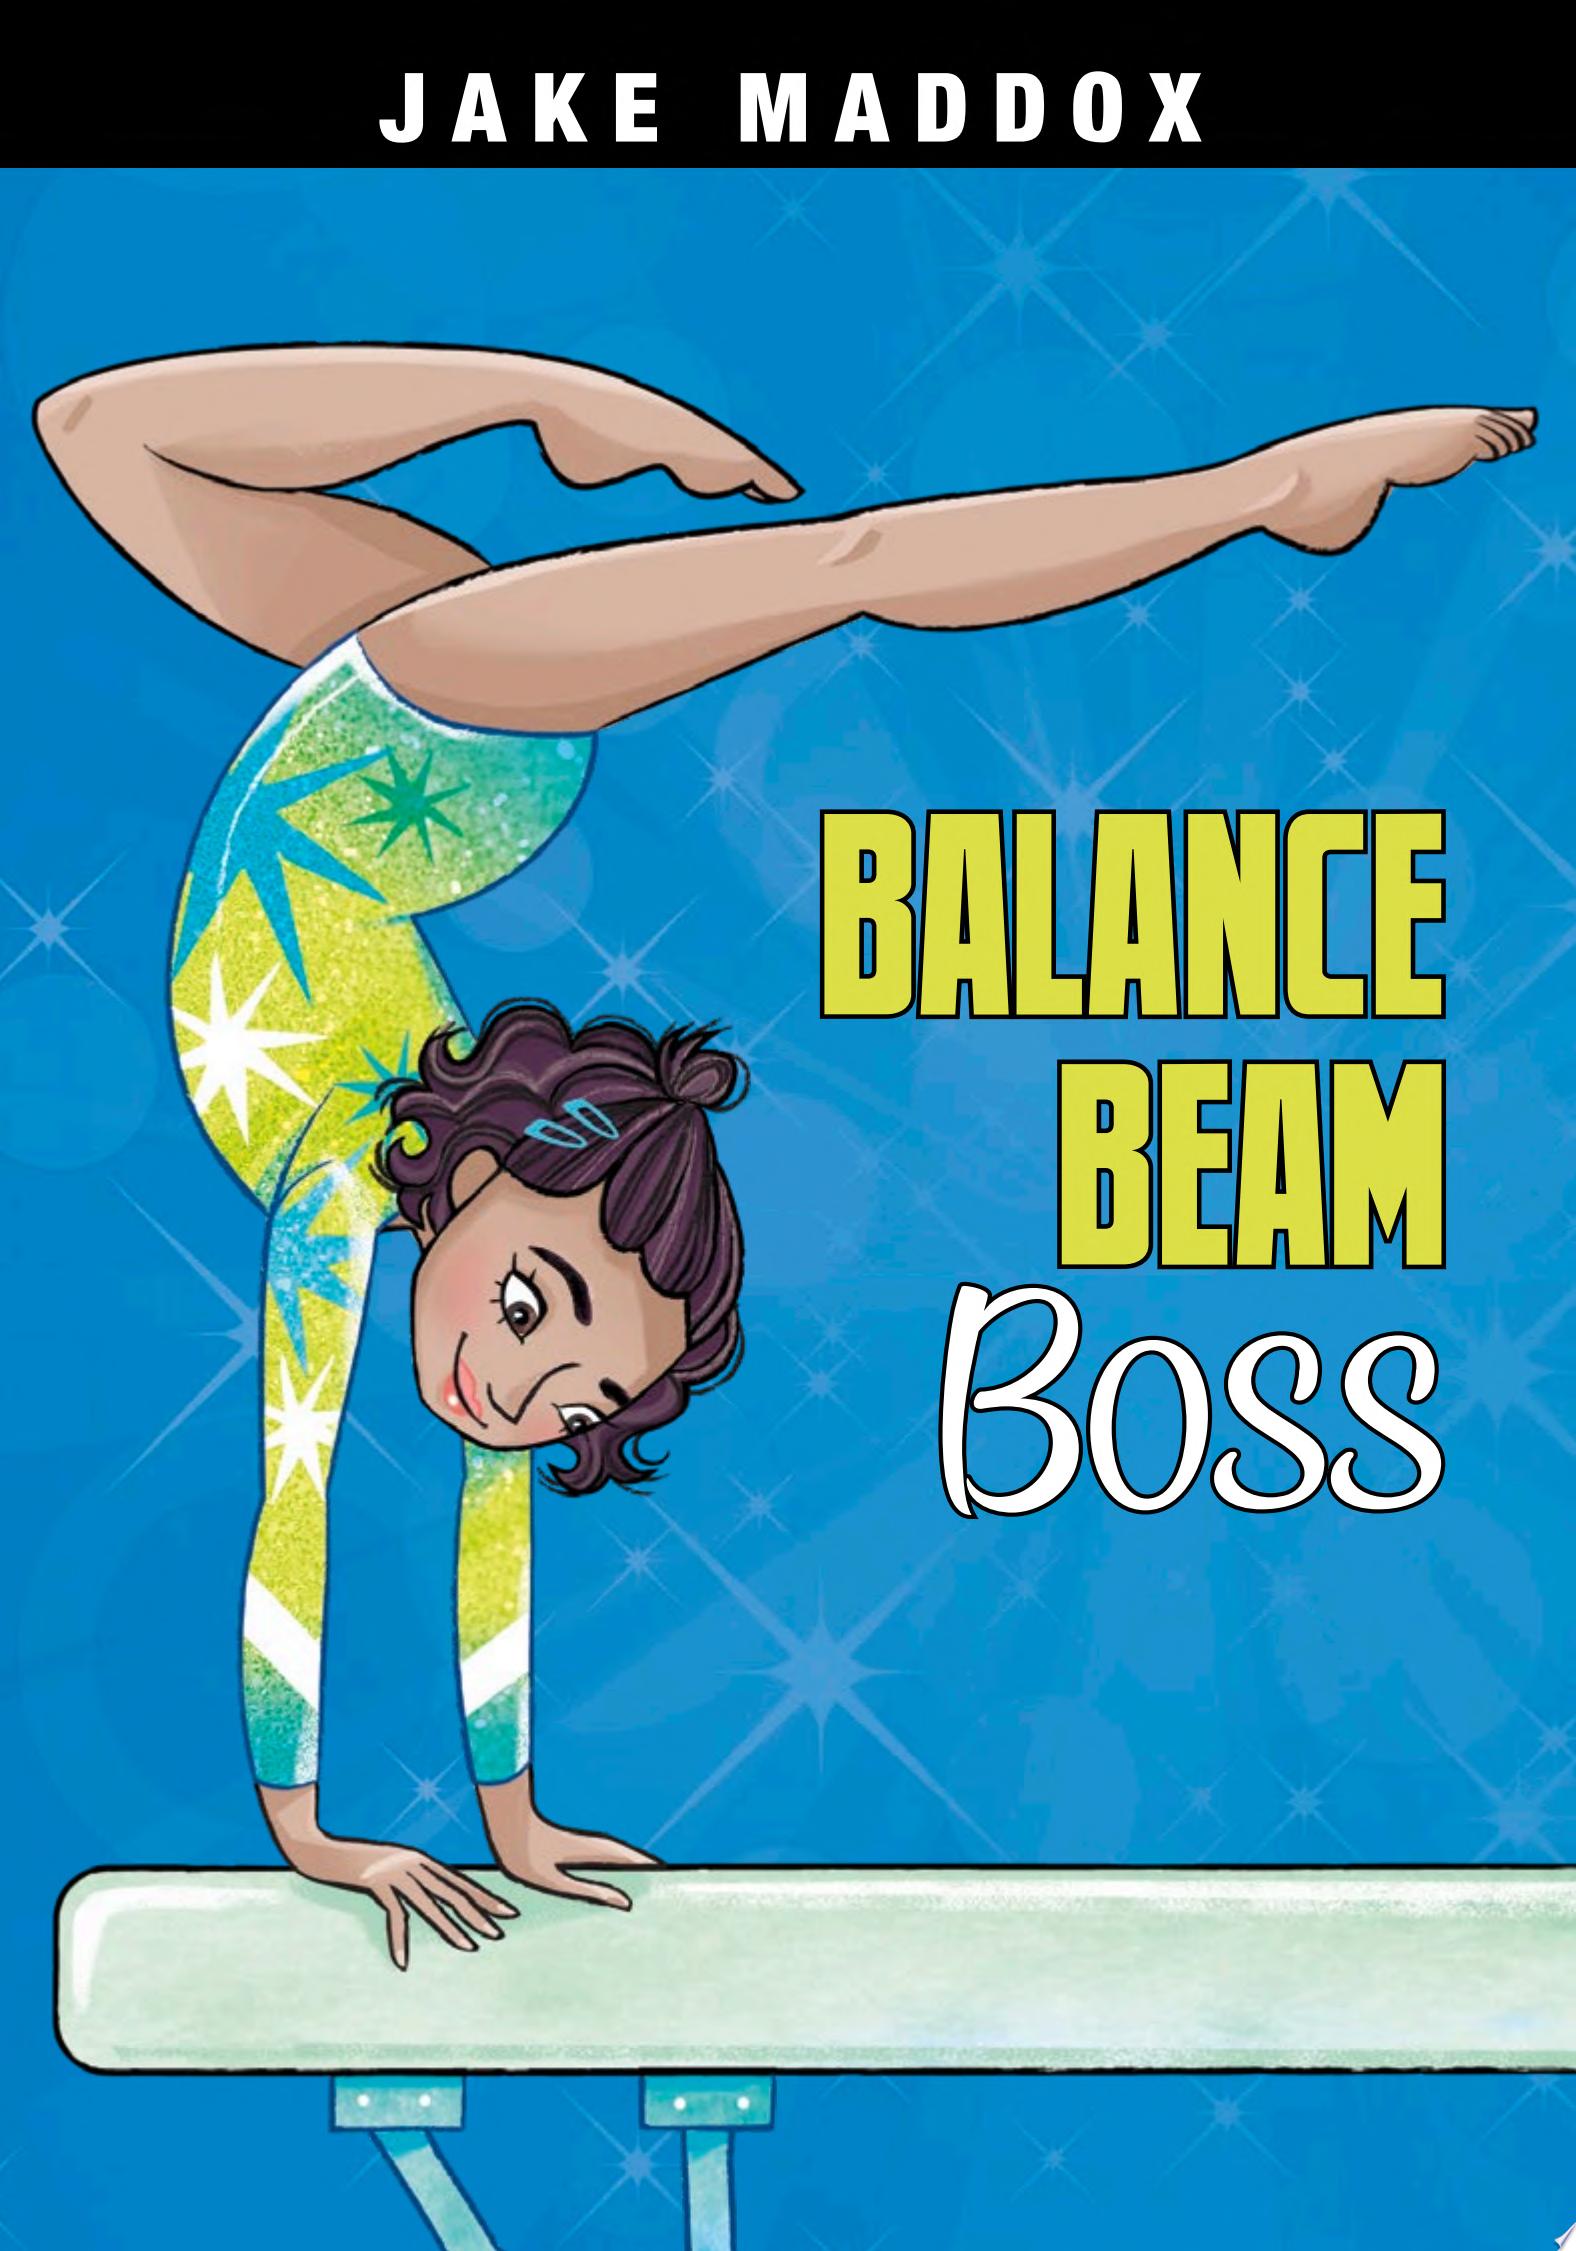 Image for "Balance Beam Boss"